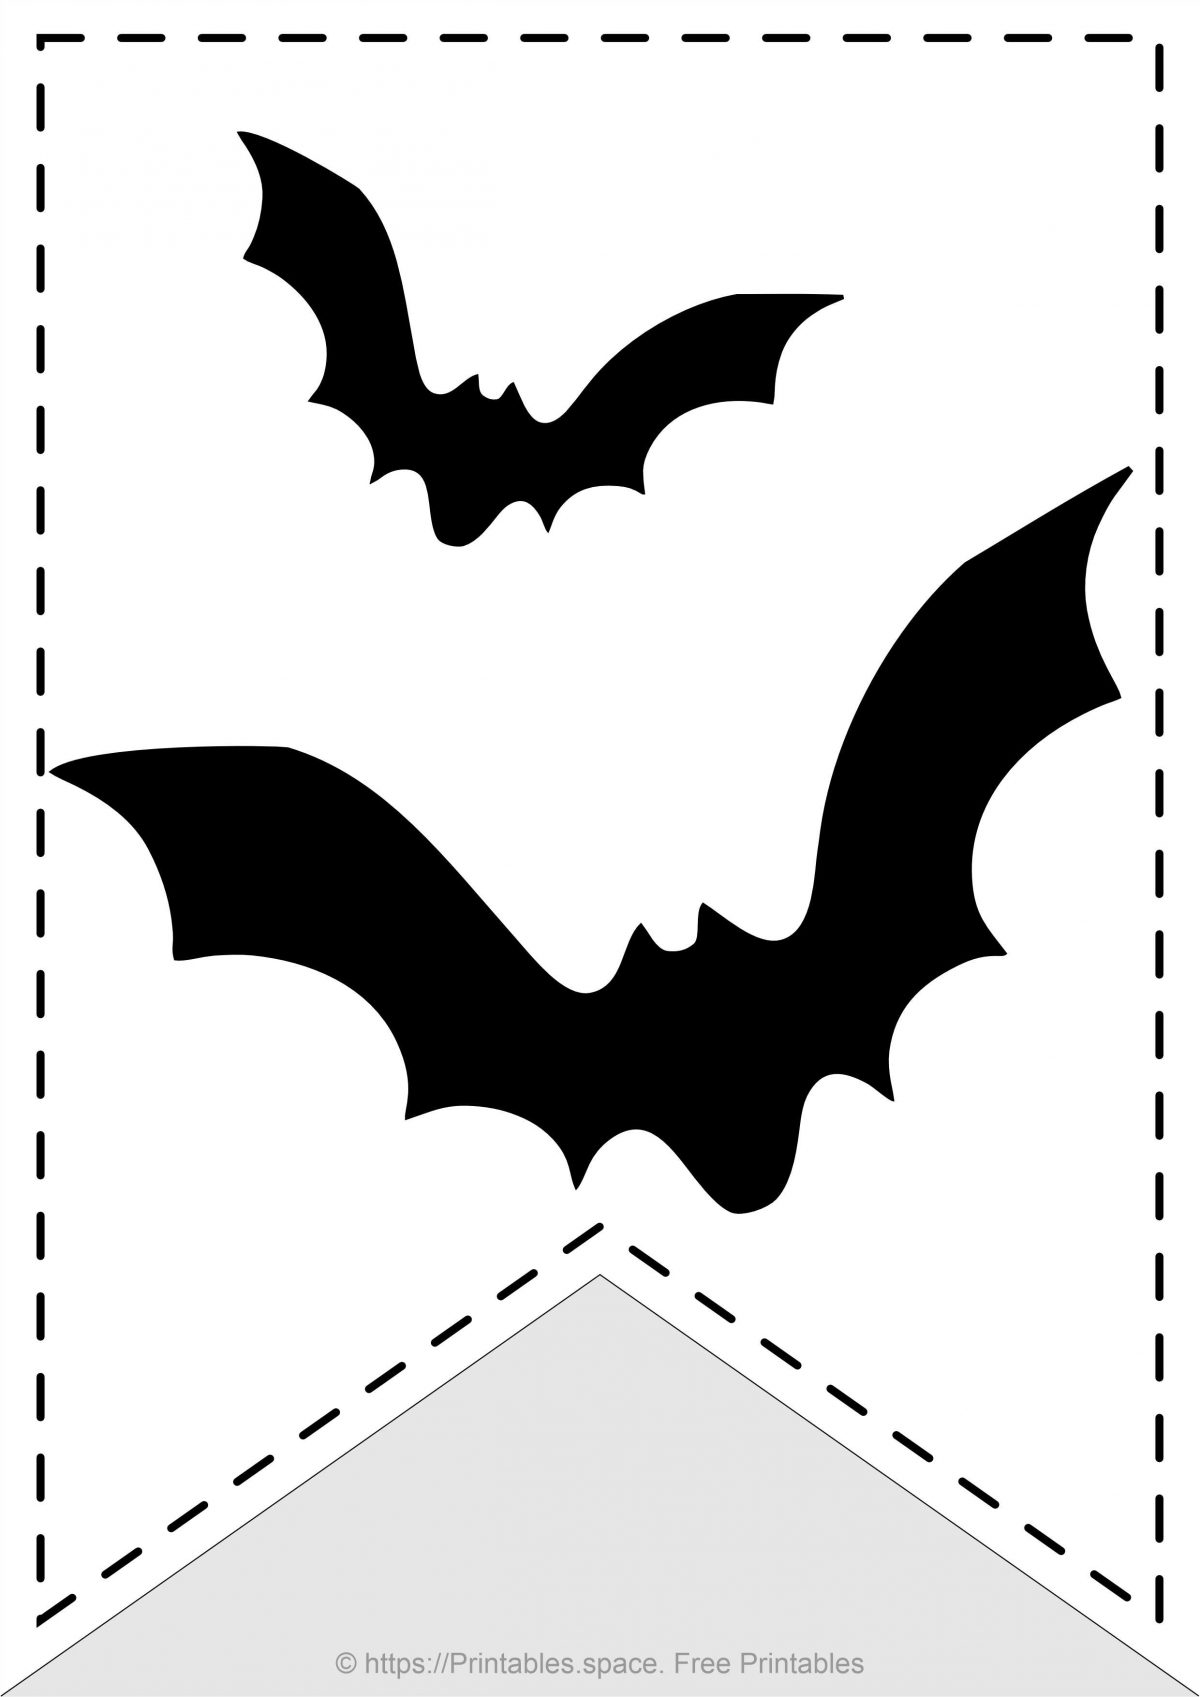 Bats. Halloween Decoration Flag